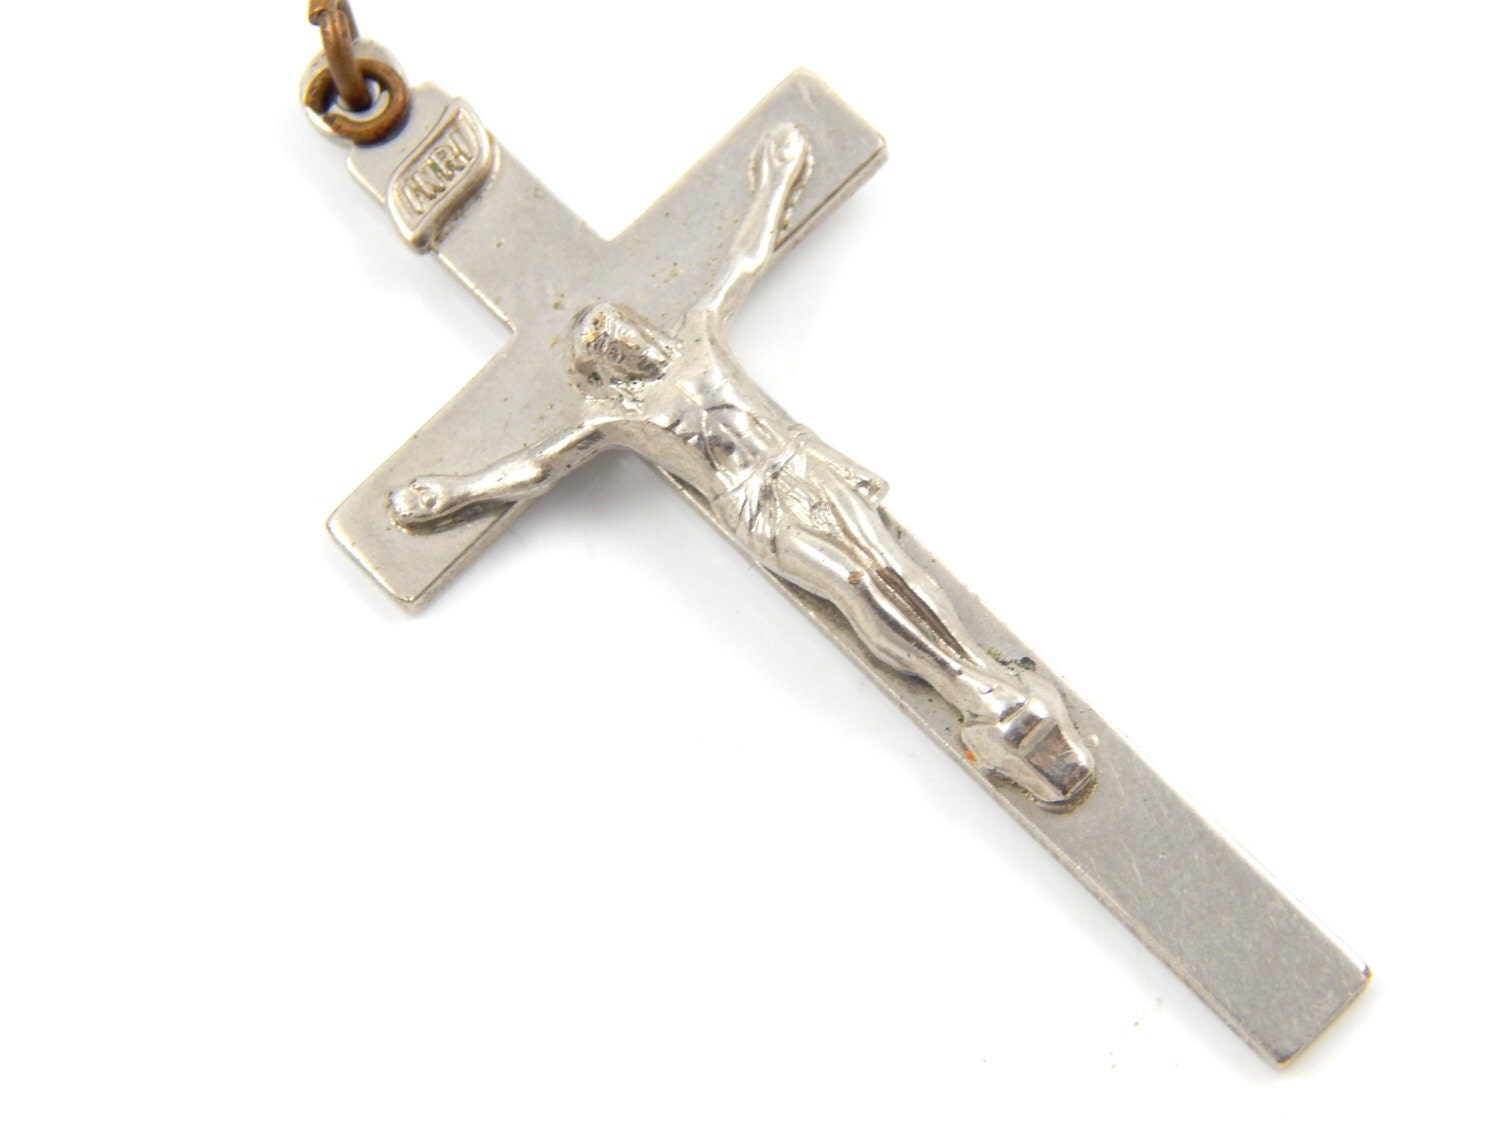 Vintage Catholic Crucifix Religious Cross by LuxMeaChristus